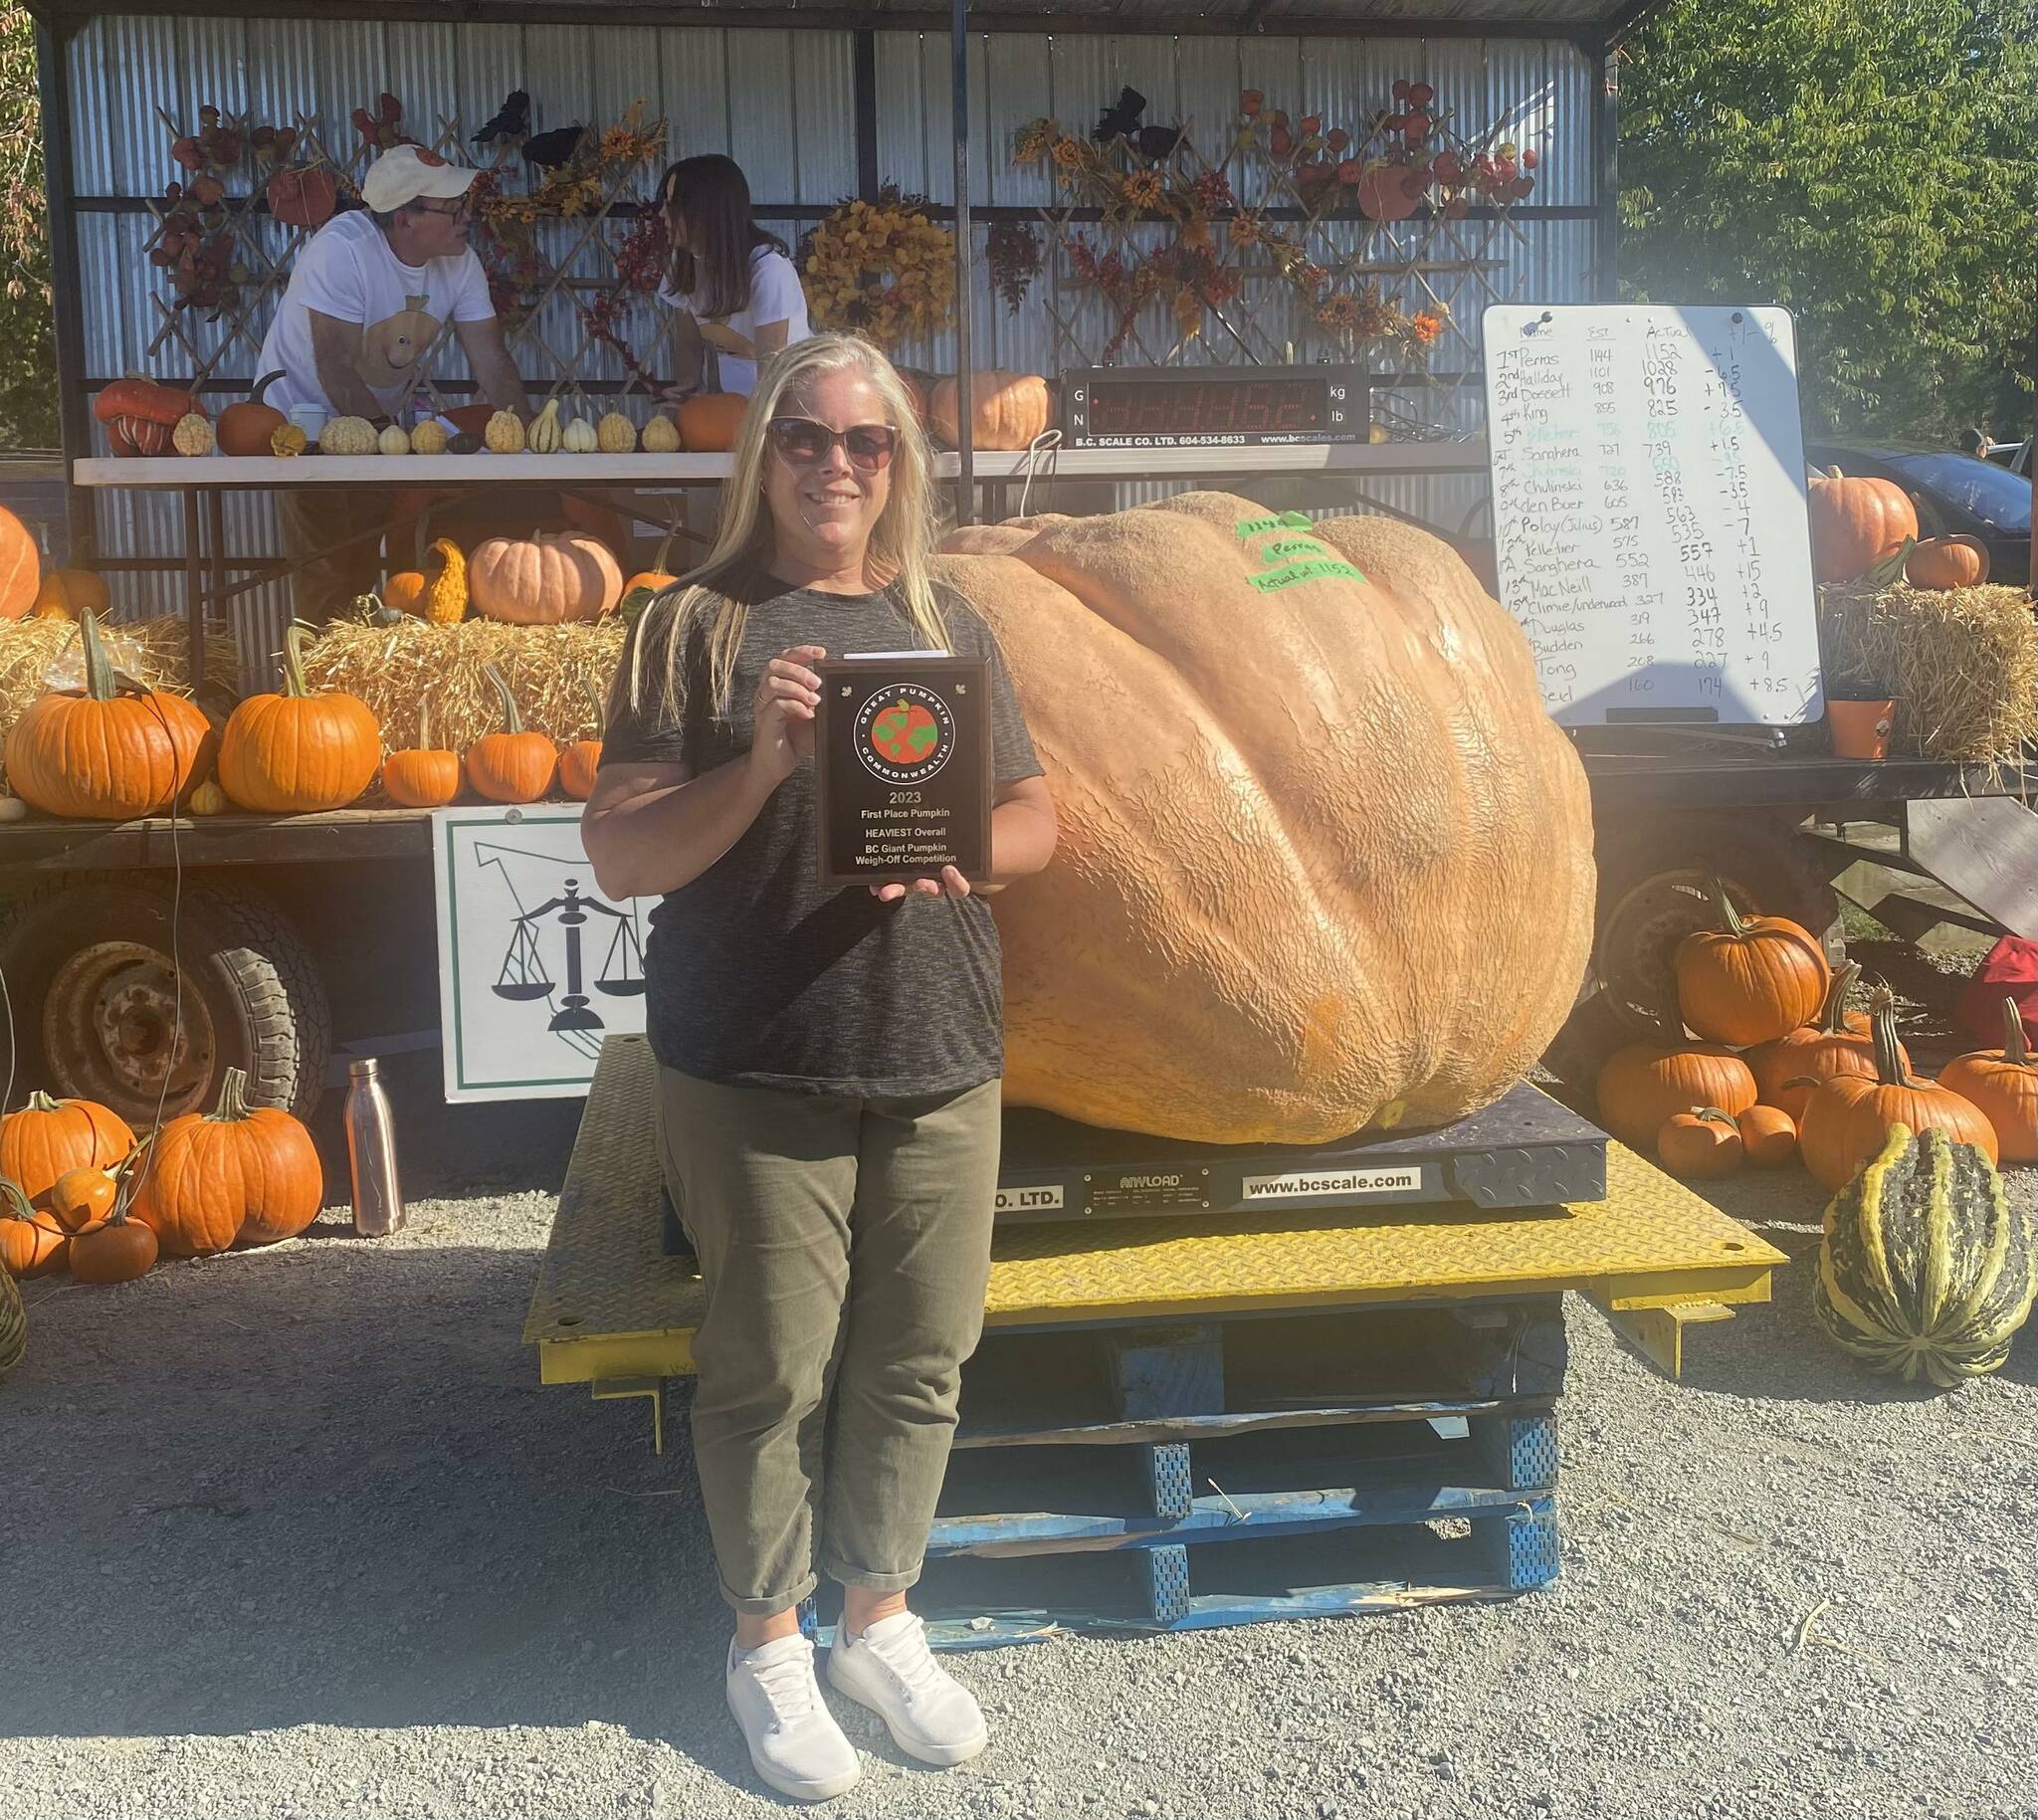 Kerri van Kooten-Perras’ giant pumpkin “Walter” won big at the Giant Pumpkins B.C. weigh-off, coming in at 1,152 lbs. Photo courtesy Kerri van Kooten-Perras